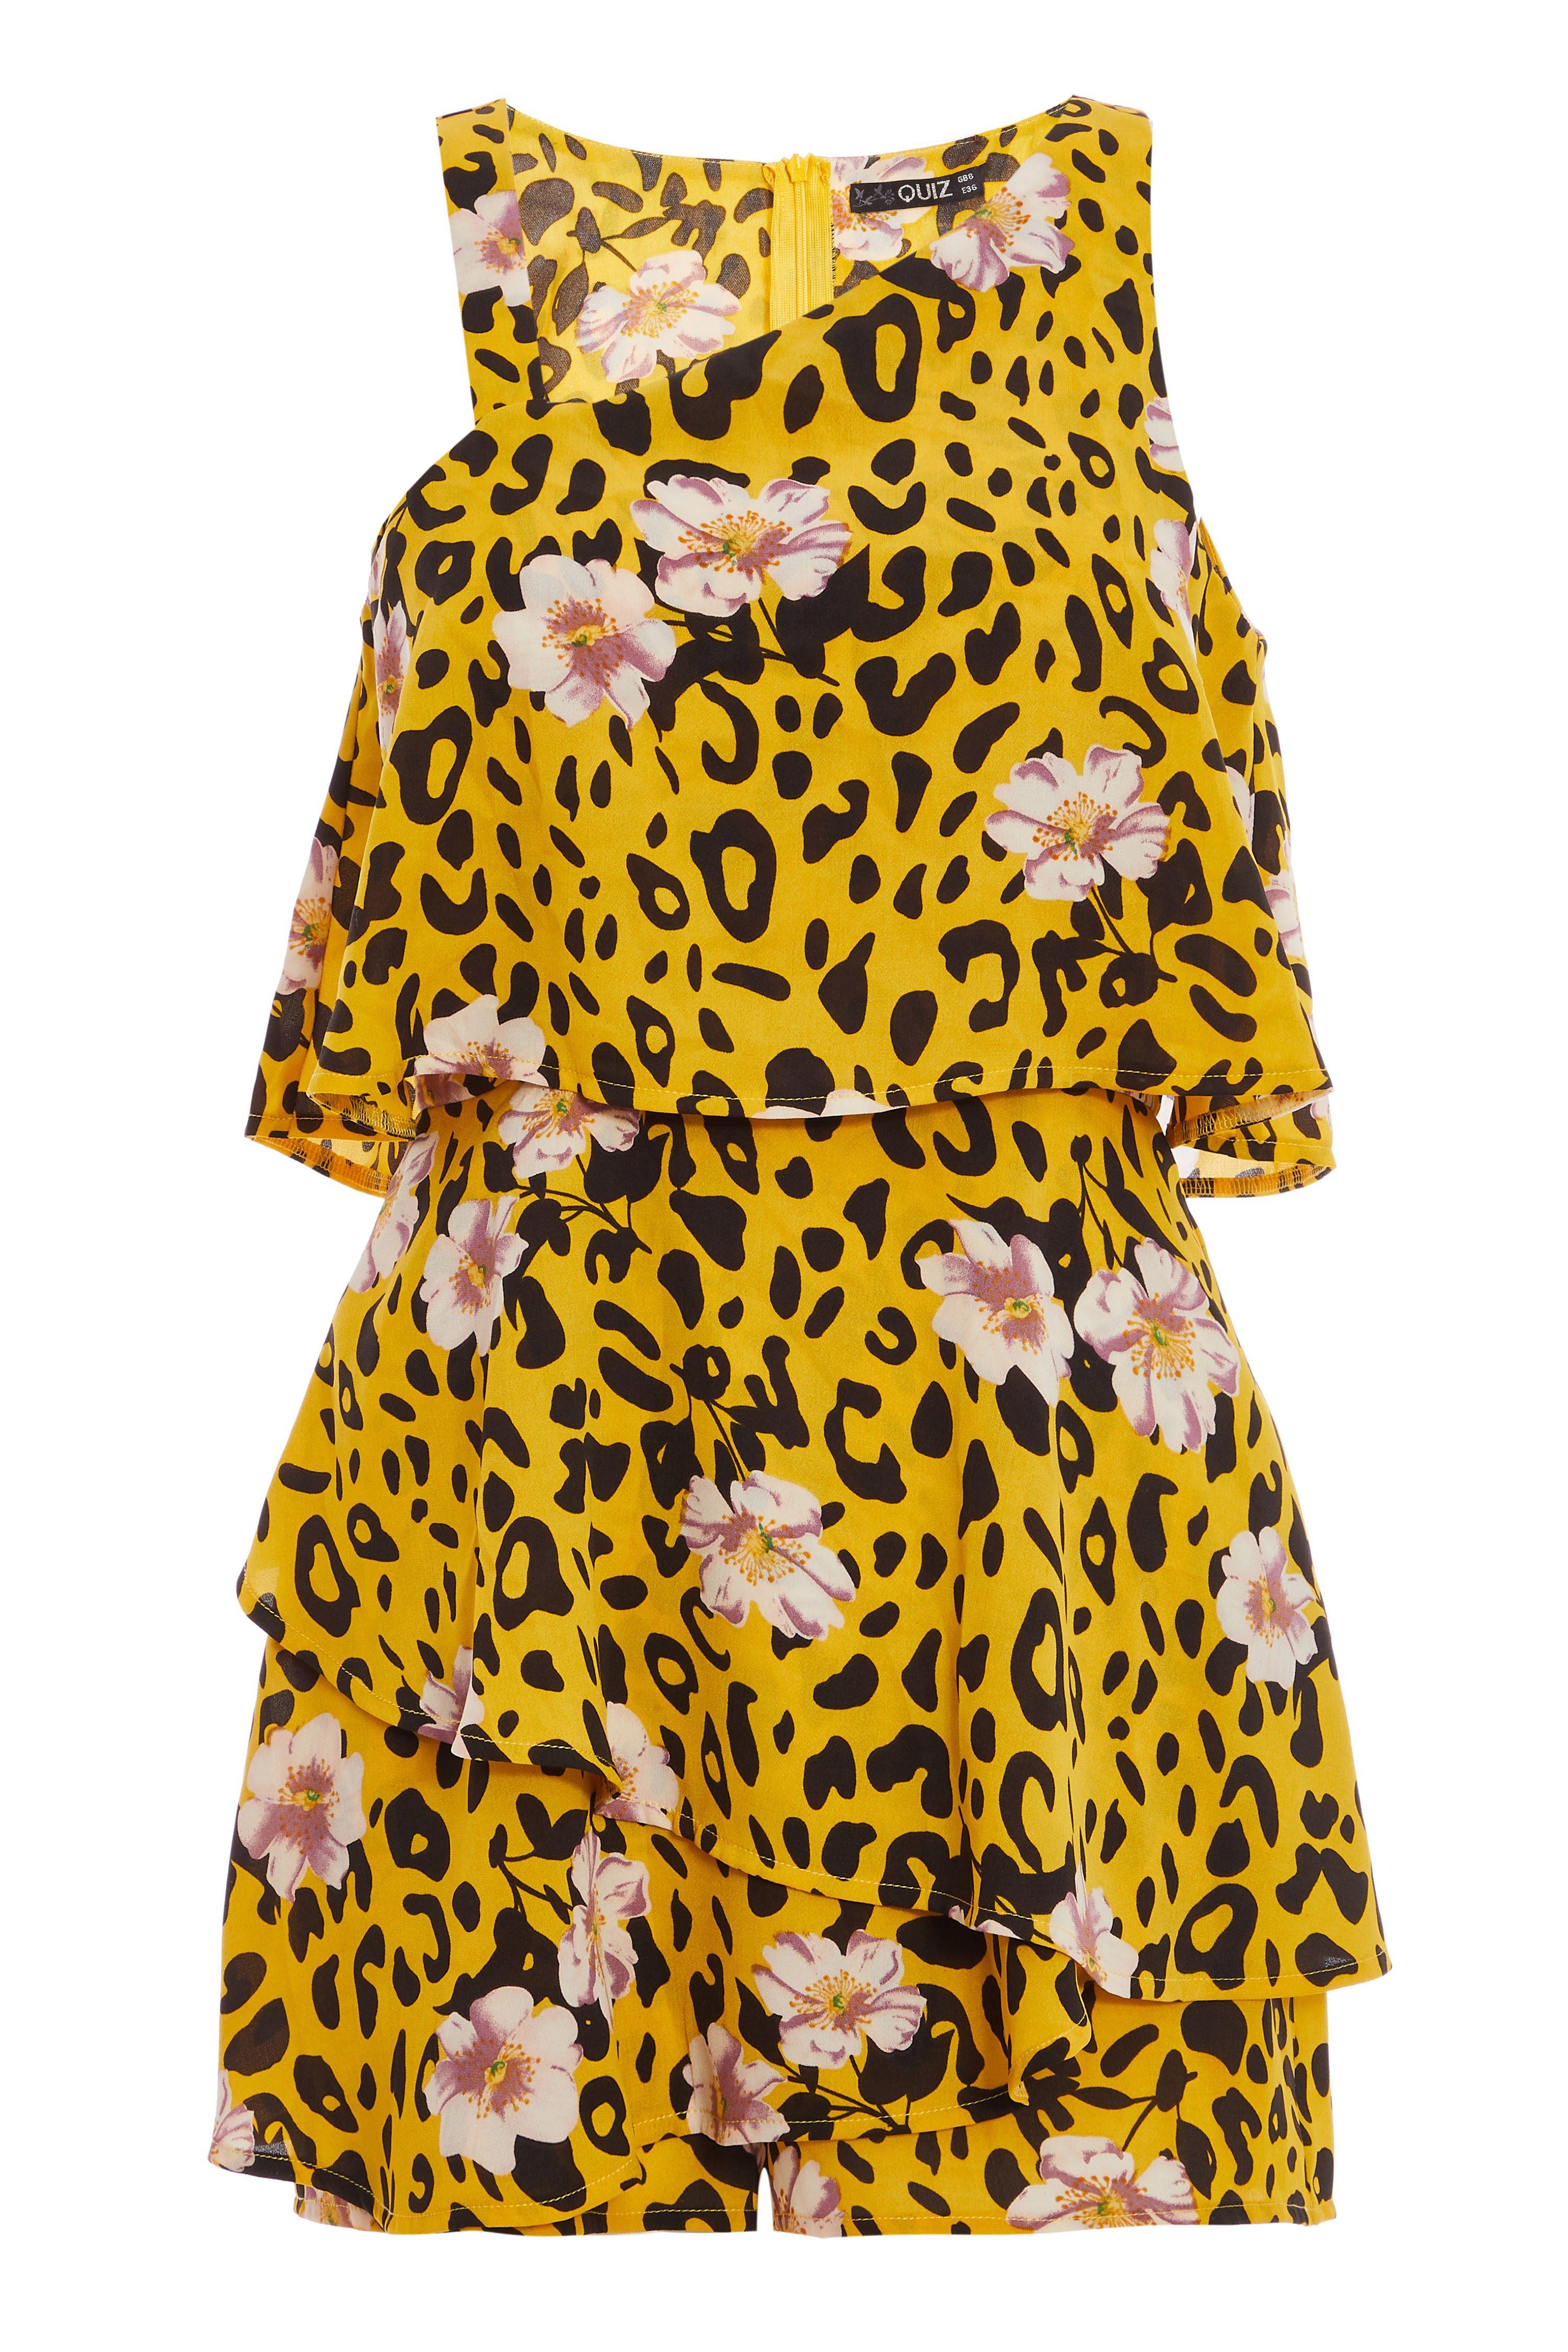 Petite Yellow Leopard Print Playsuit - Quiz Clothing